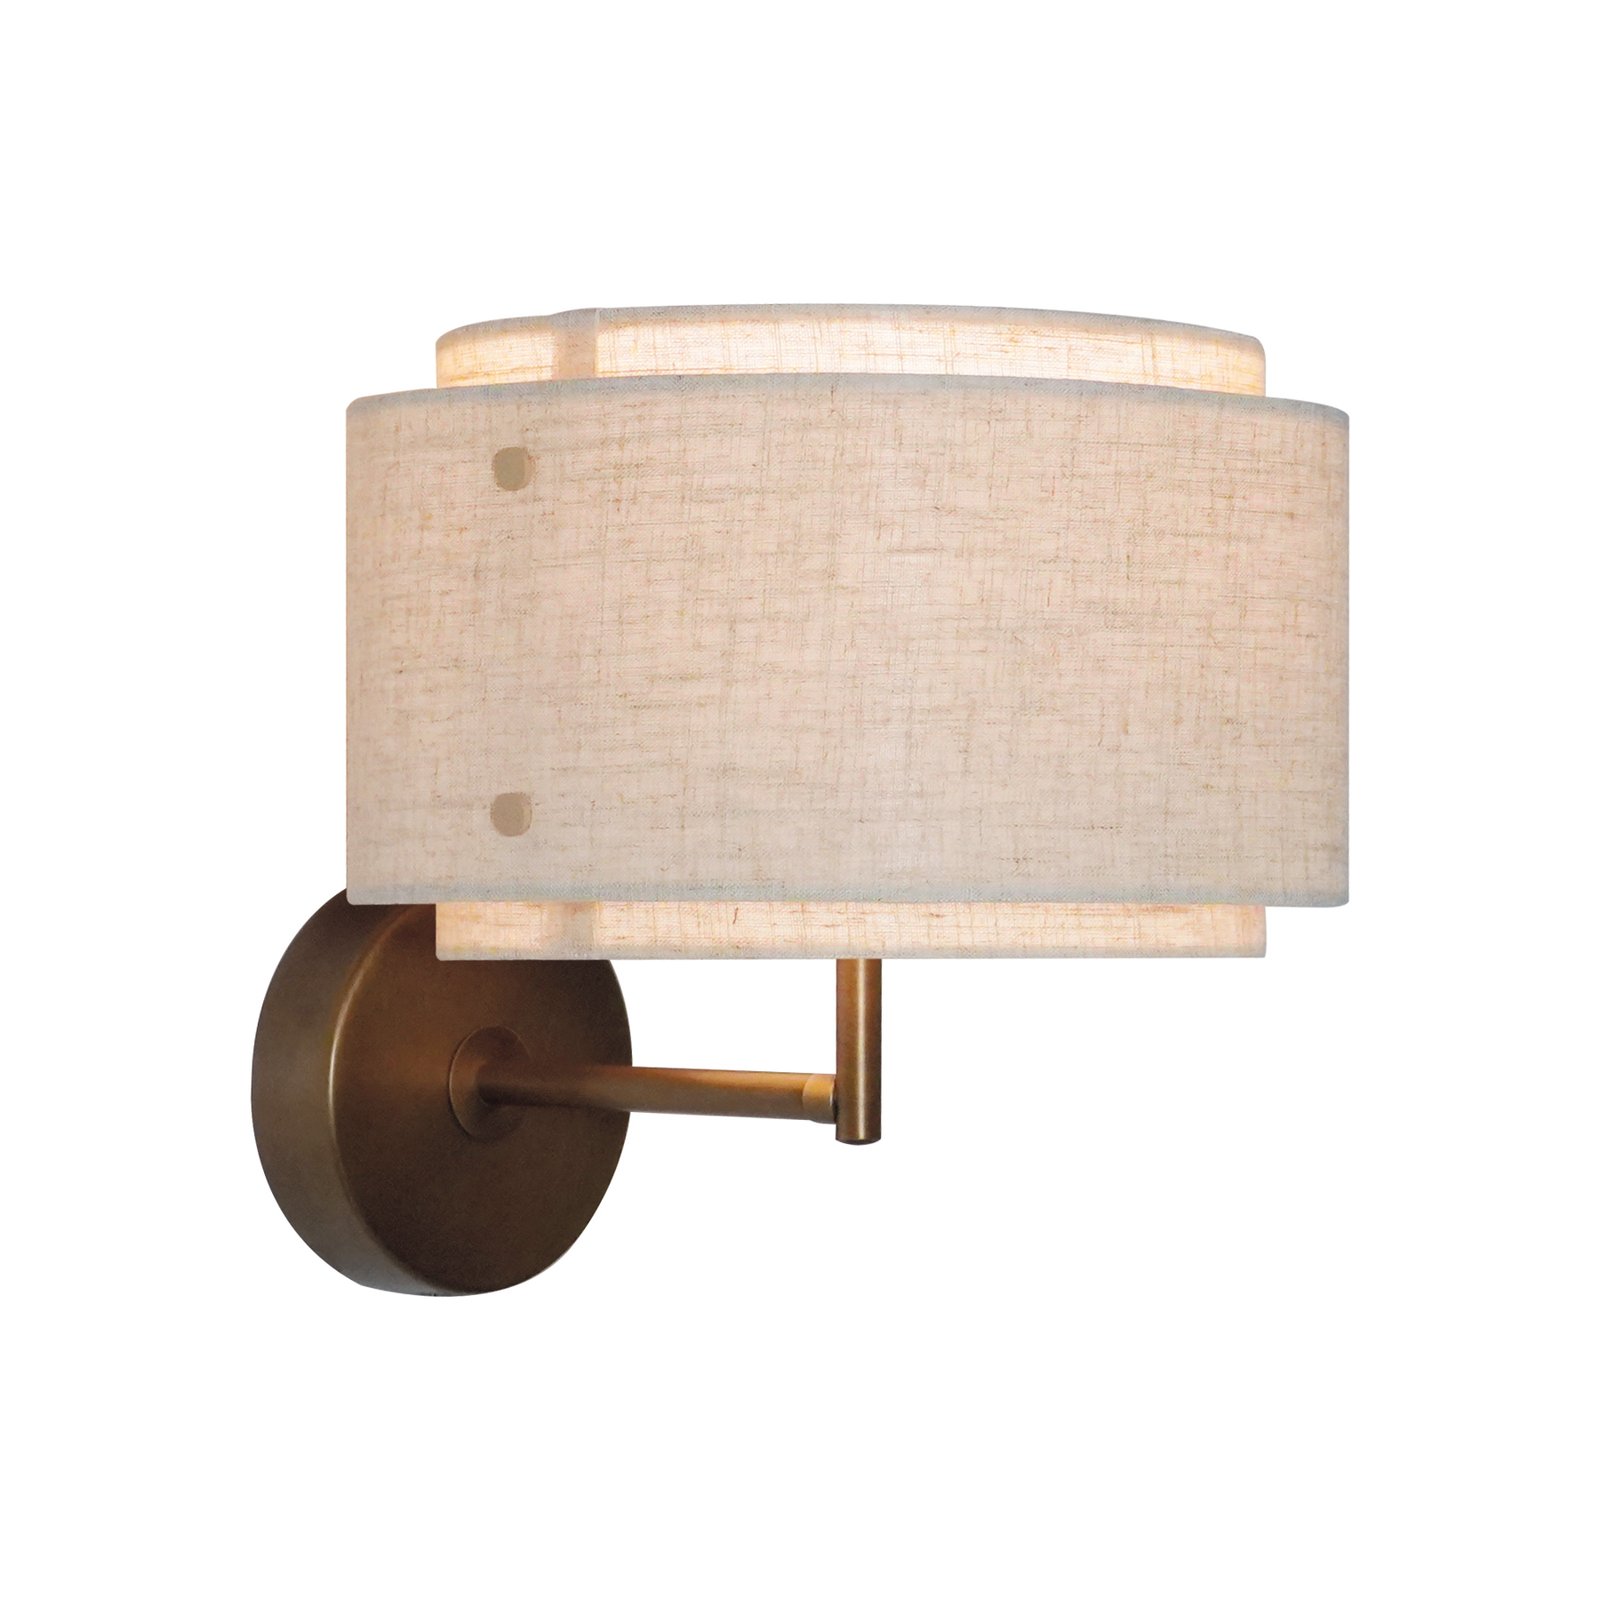 Takai wall light, double-layer fabric lampshade